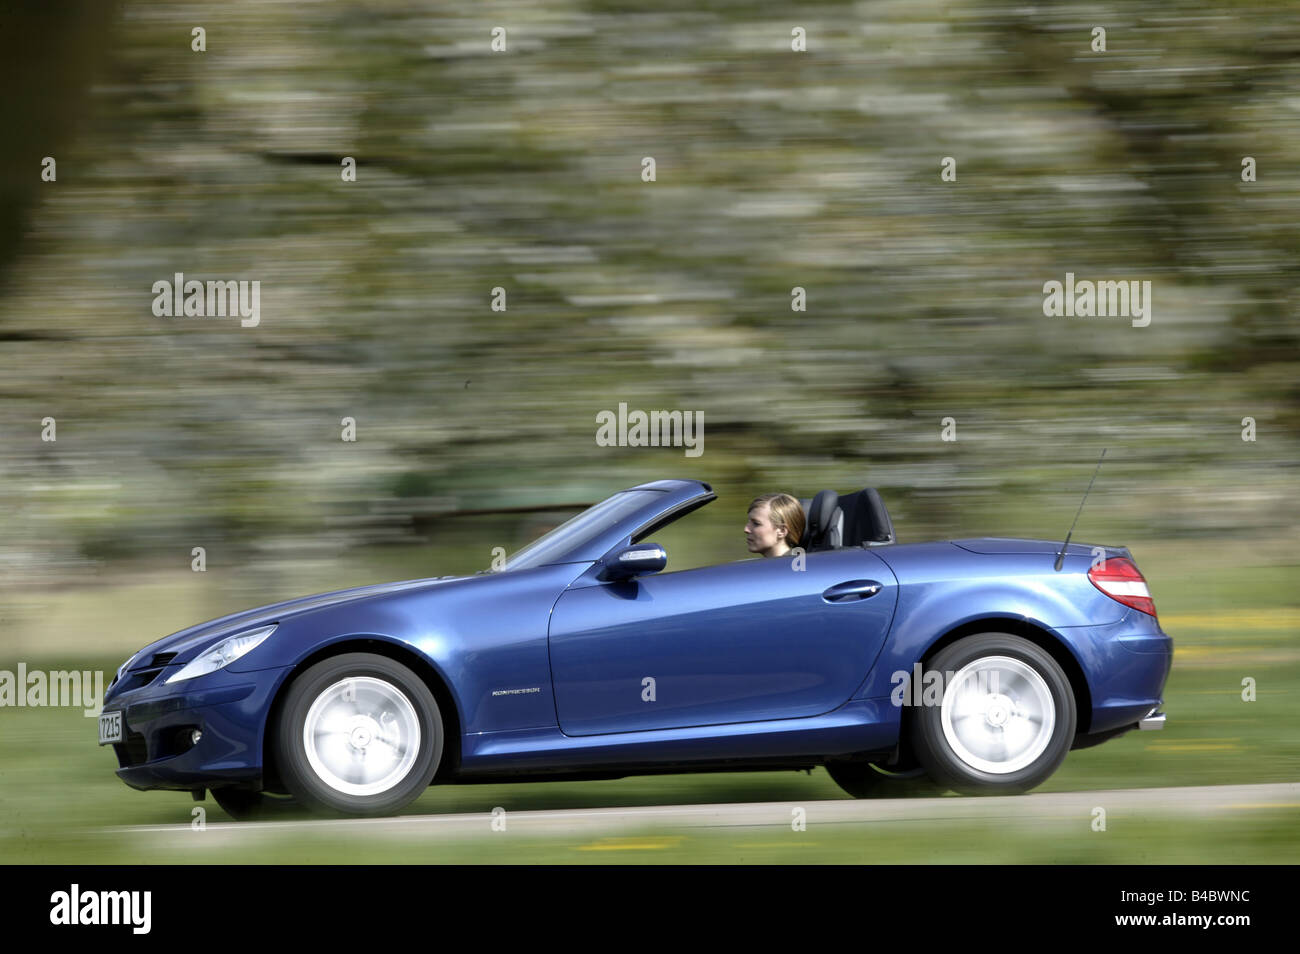 Mercedes slk 200 kompressor auto hi-res stock photography and images - Alamy